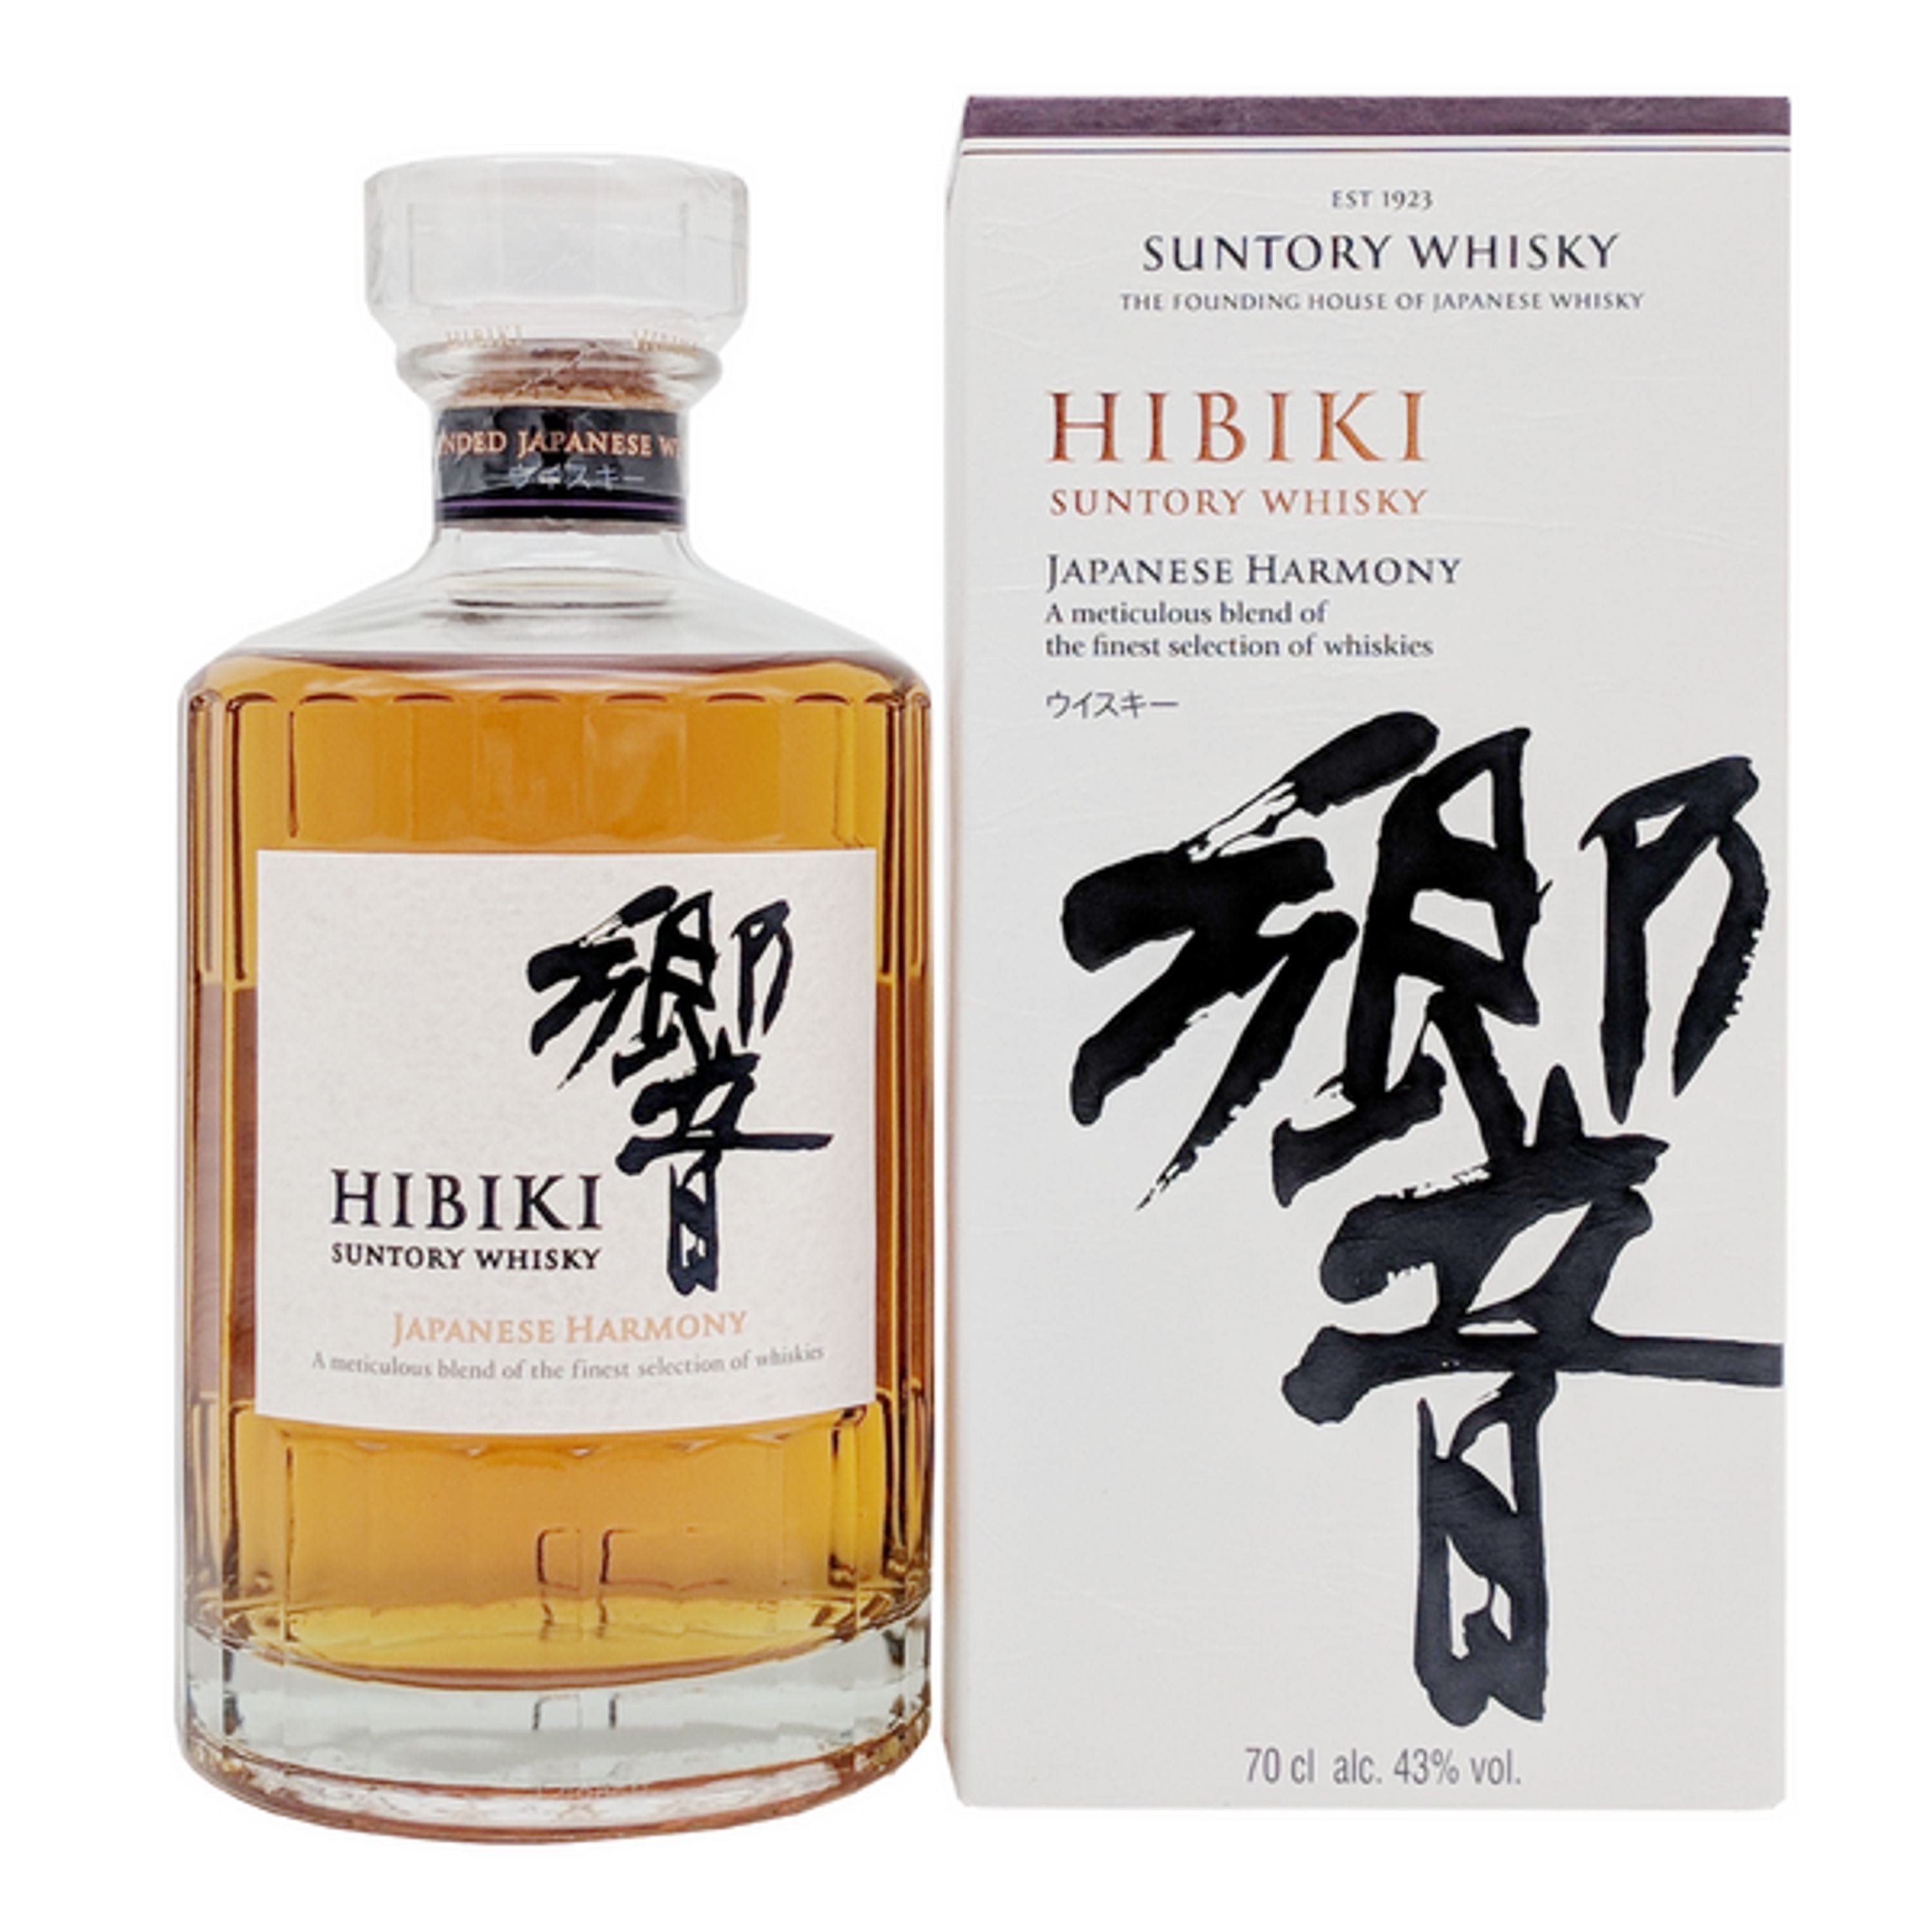 Suntory Hibiki Japanese Harmony Japan Blended Whiskey 0.7l, alc. 43% by volume